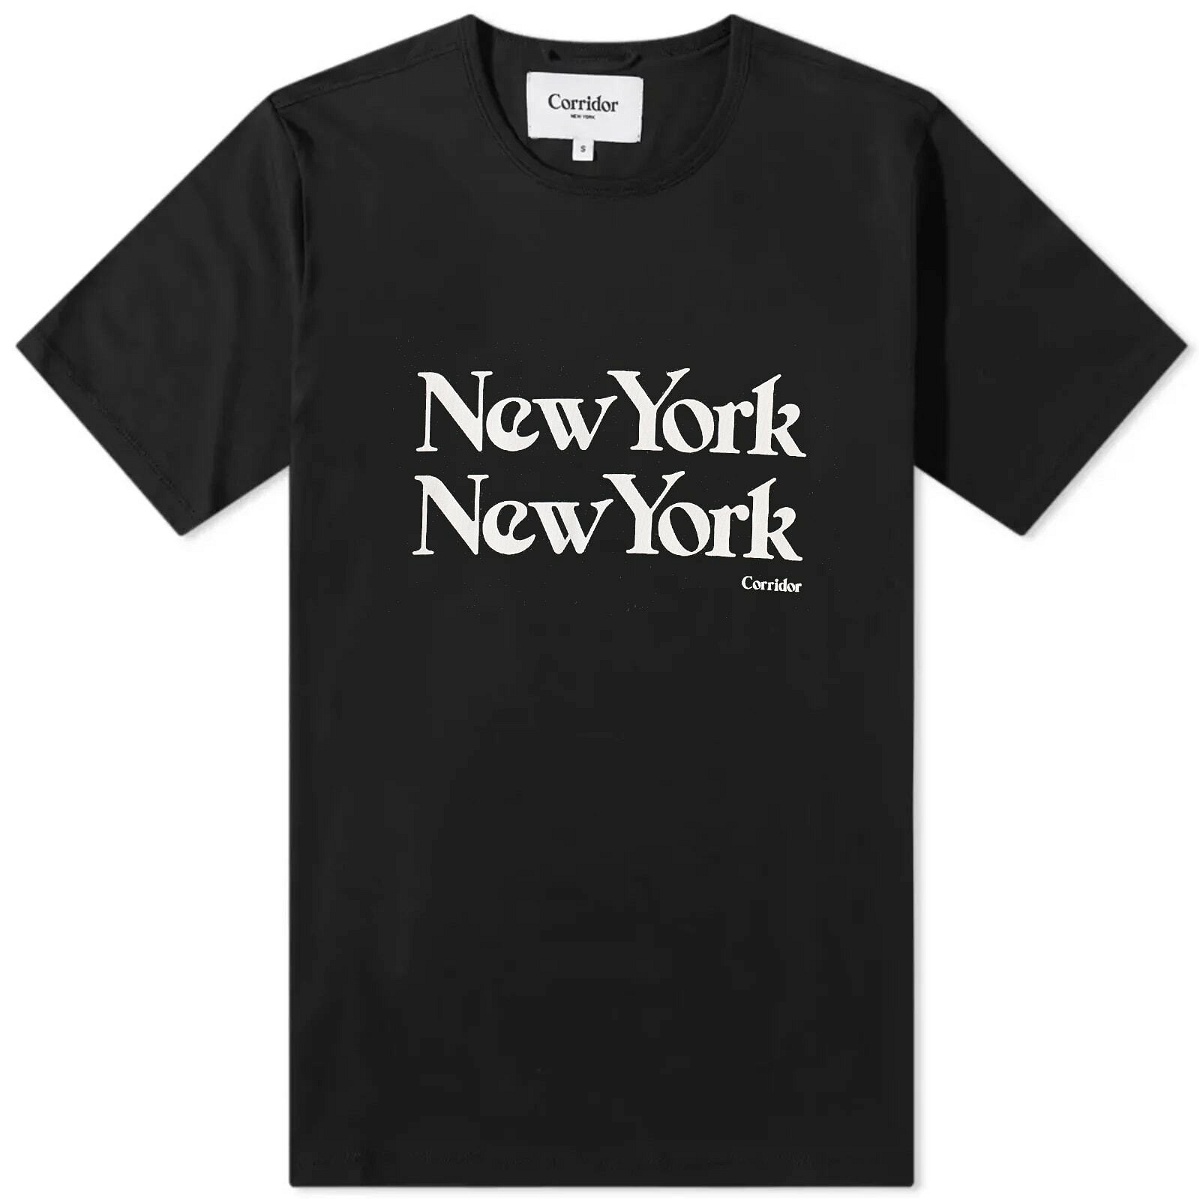 Corridor Men's New York New York T-Shirt in Black Corridor